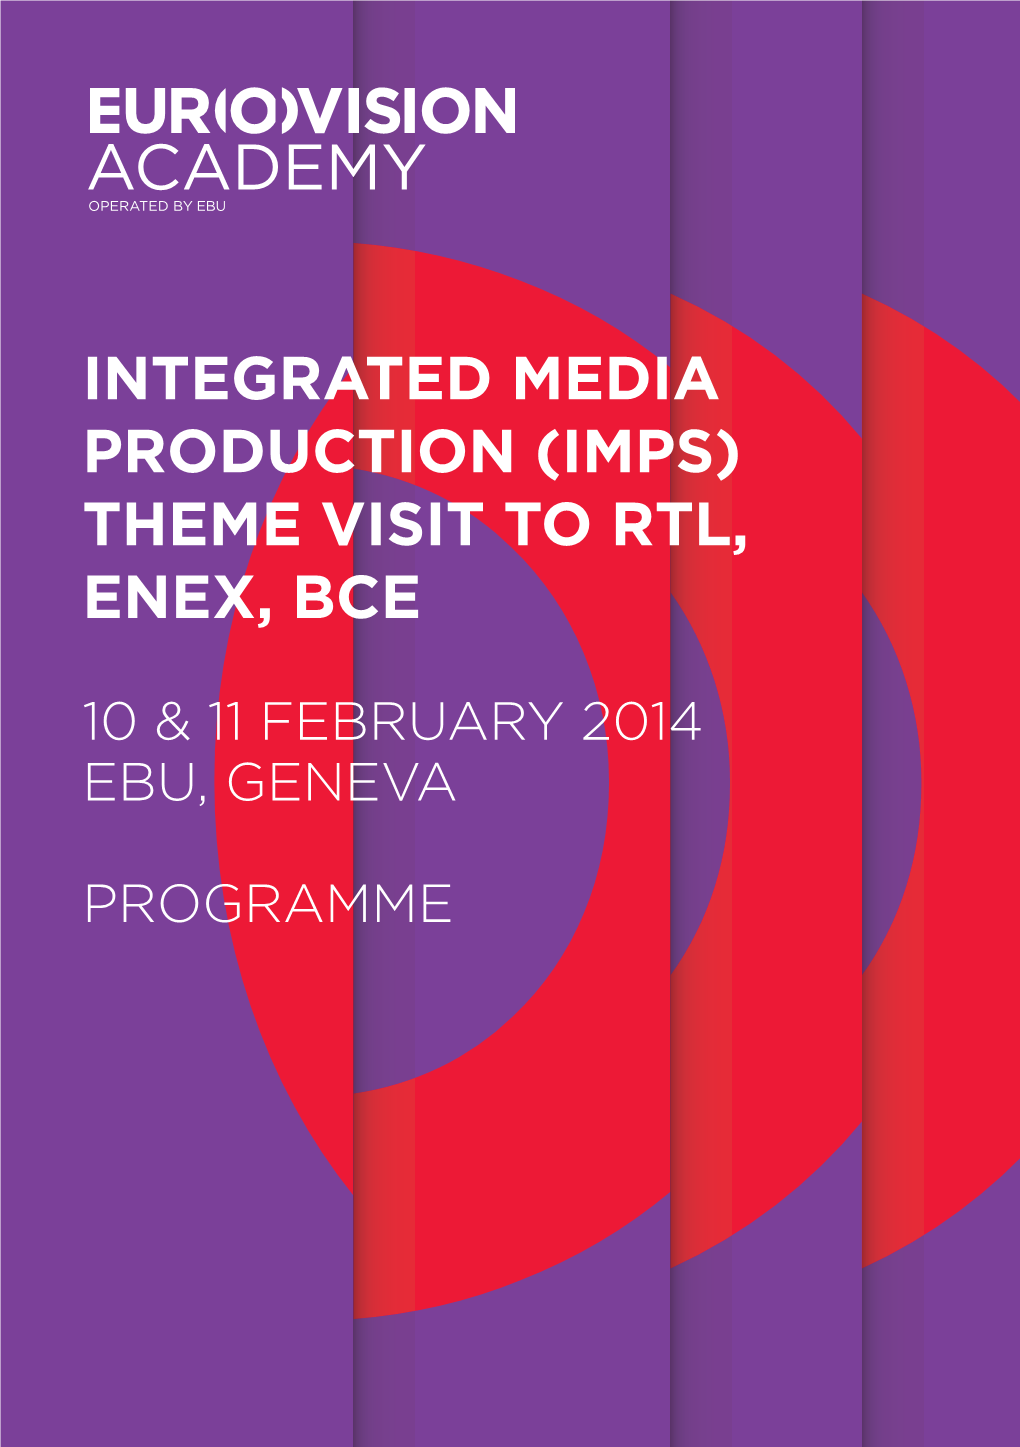 (IMPS) Theme Visit to RTL, ENEX, BCE